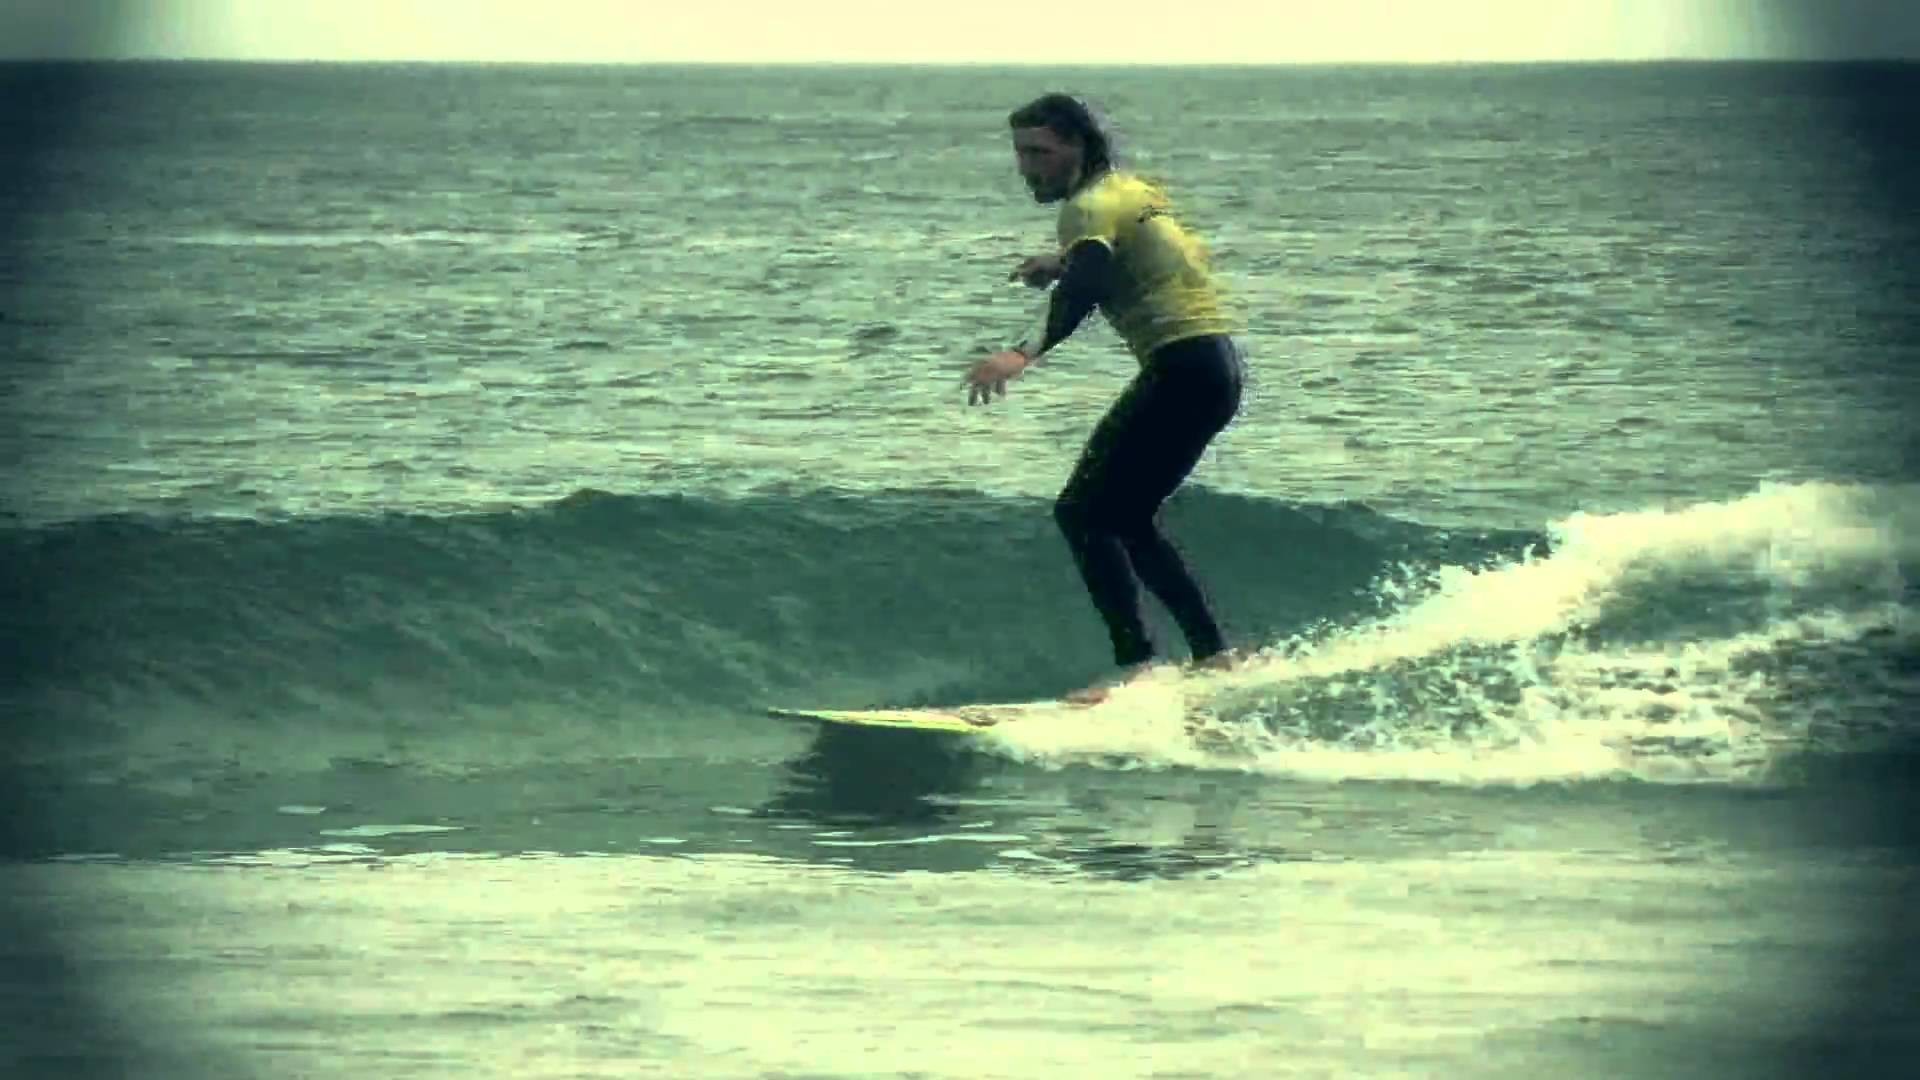 1920x1080 Surfer Ben Skinner Longboarding Video - Surfing St Ives - SkinDog Long  Boarder nose riding - YouTube